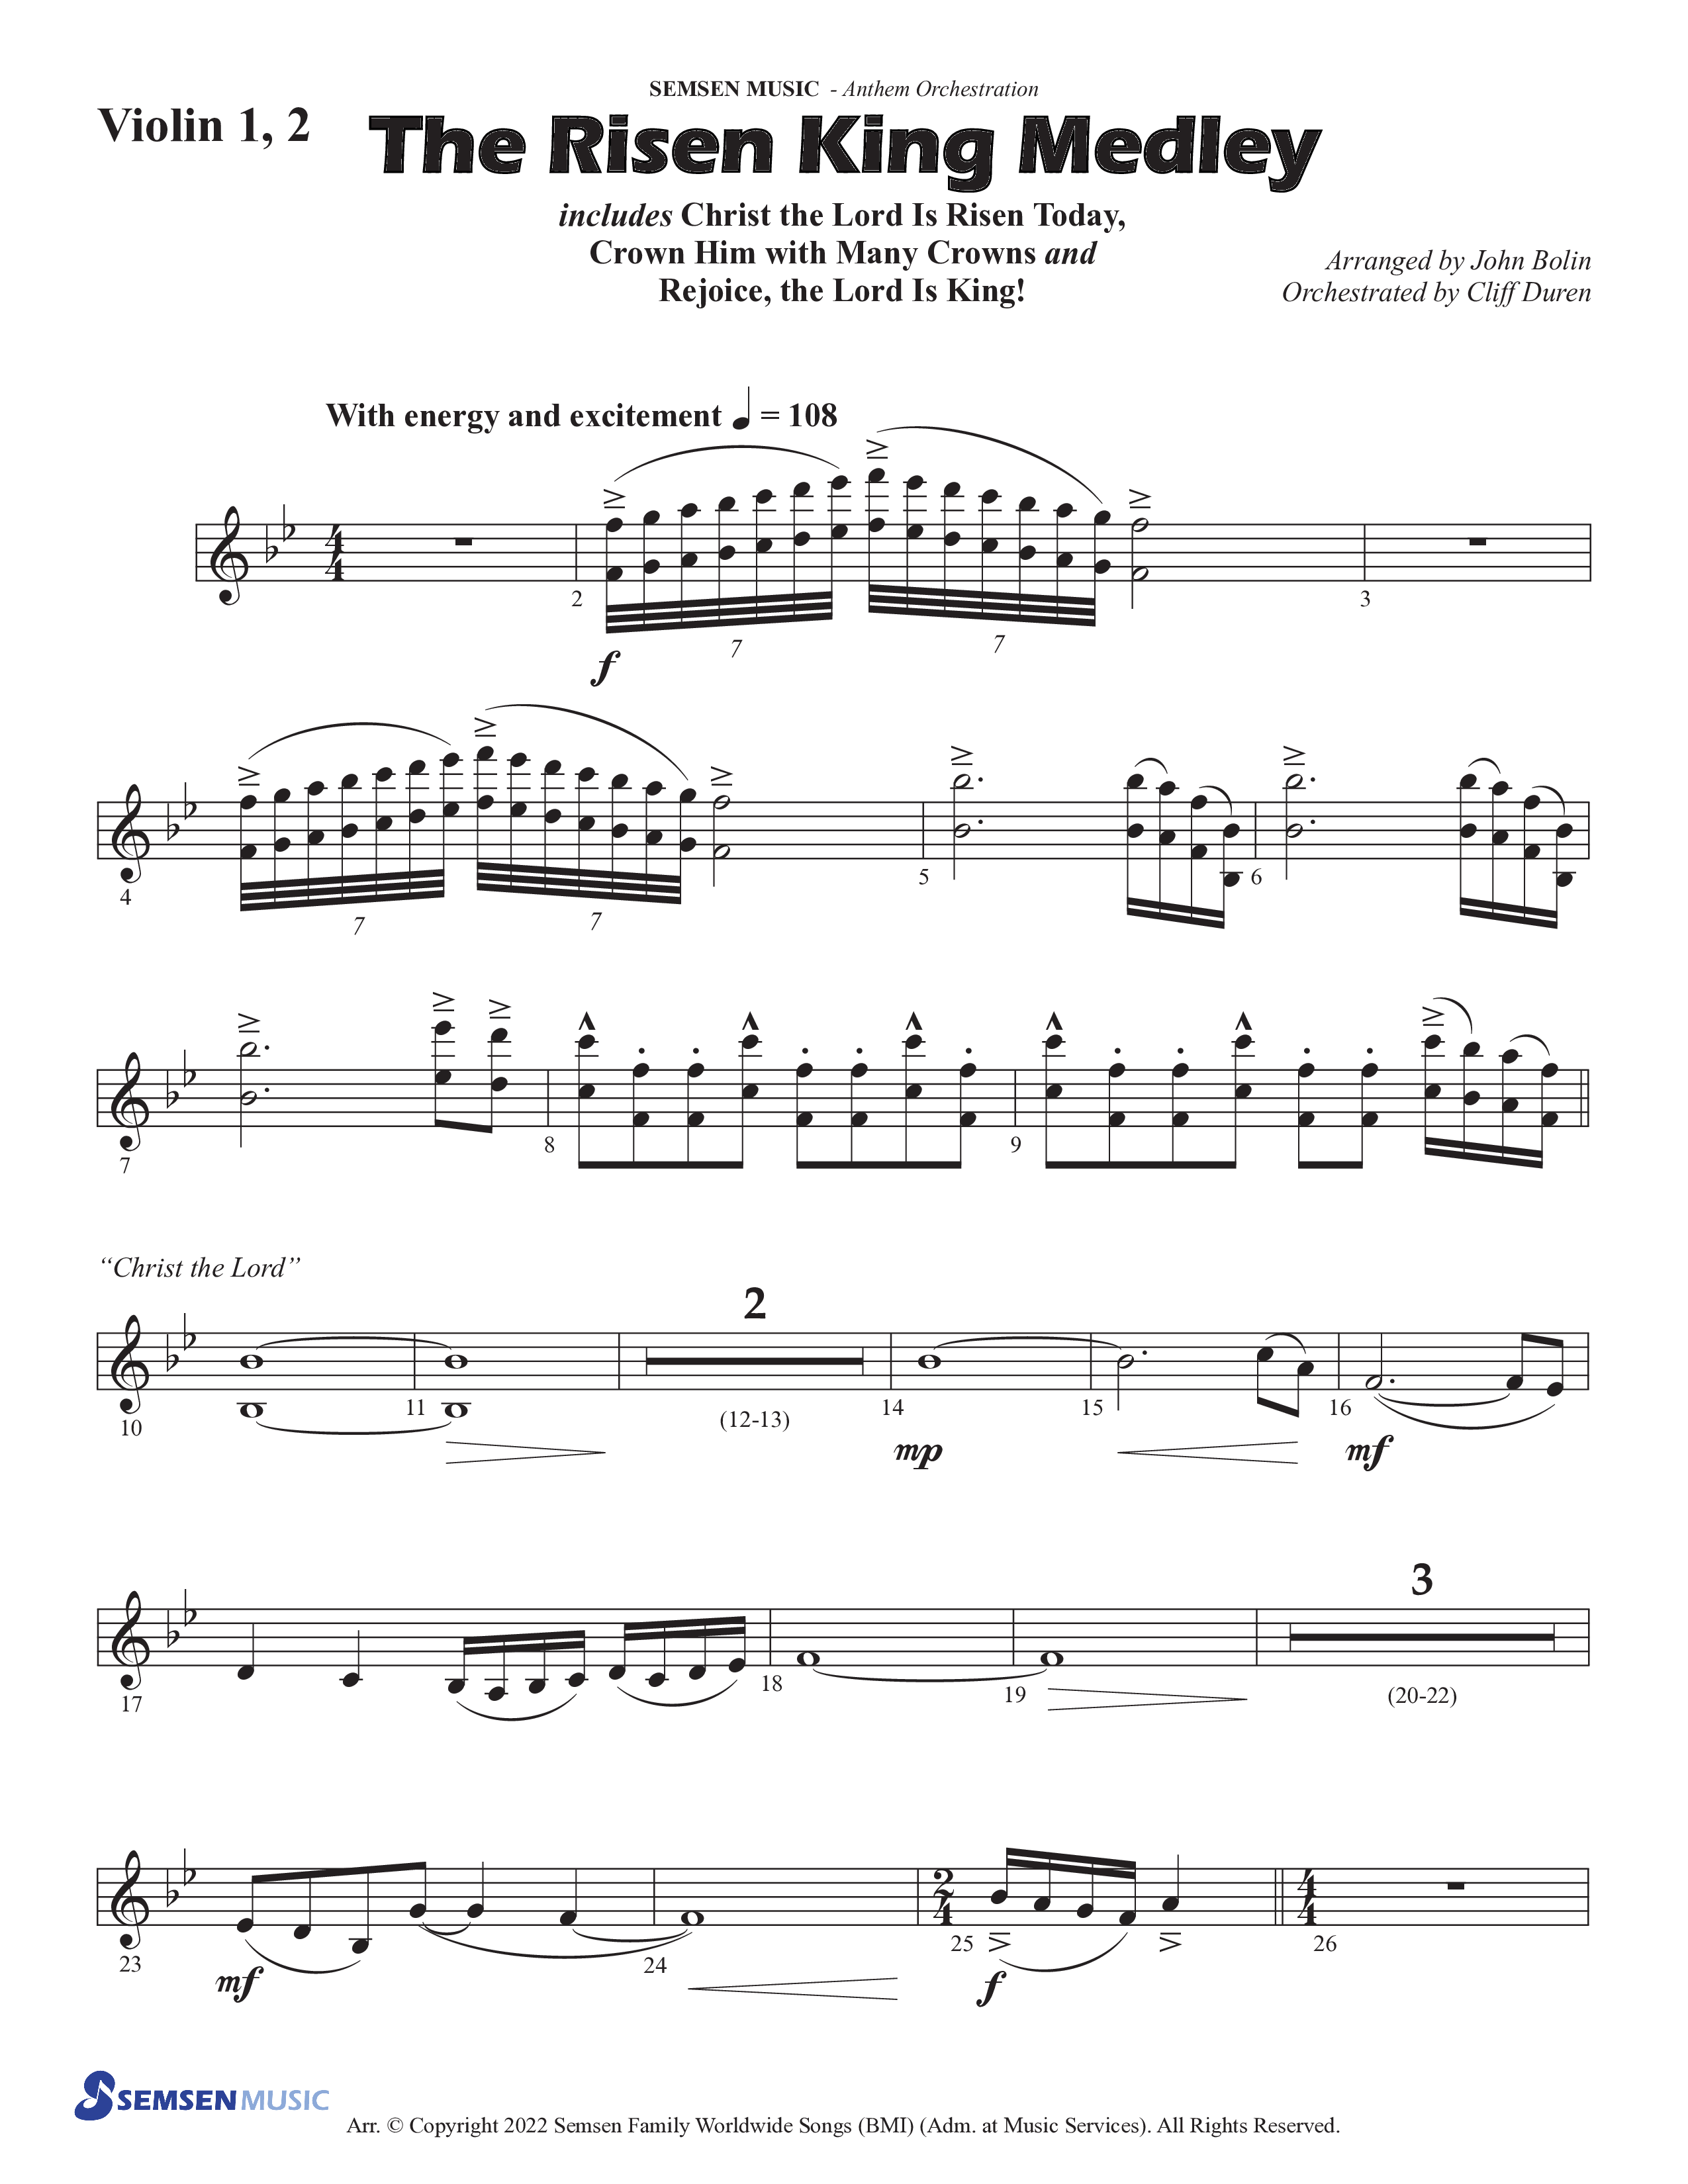 The Risen King Medley (Choral Anthem SATB) Violin 1/2 (Semsen Music / Arr. John Bolin / Orch. Cliff Duren)